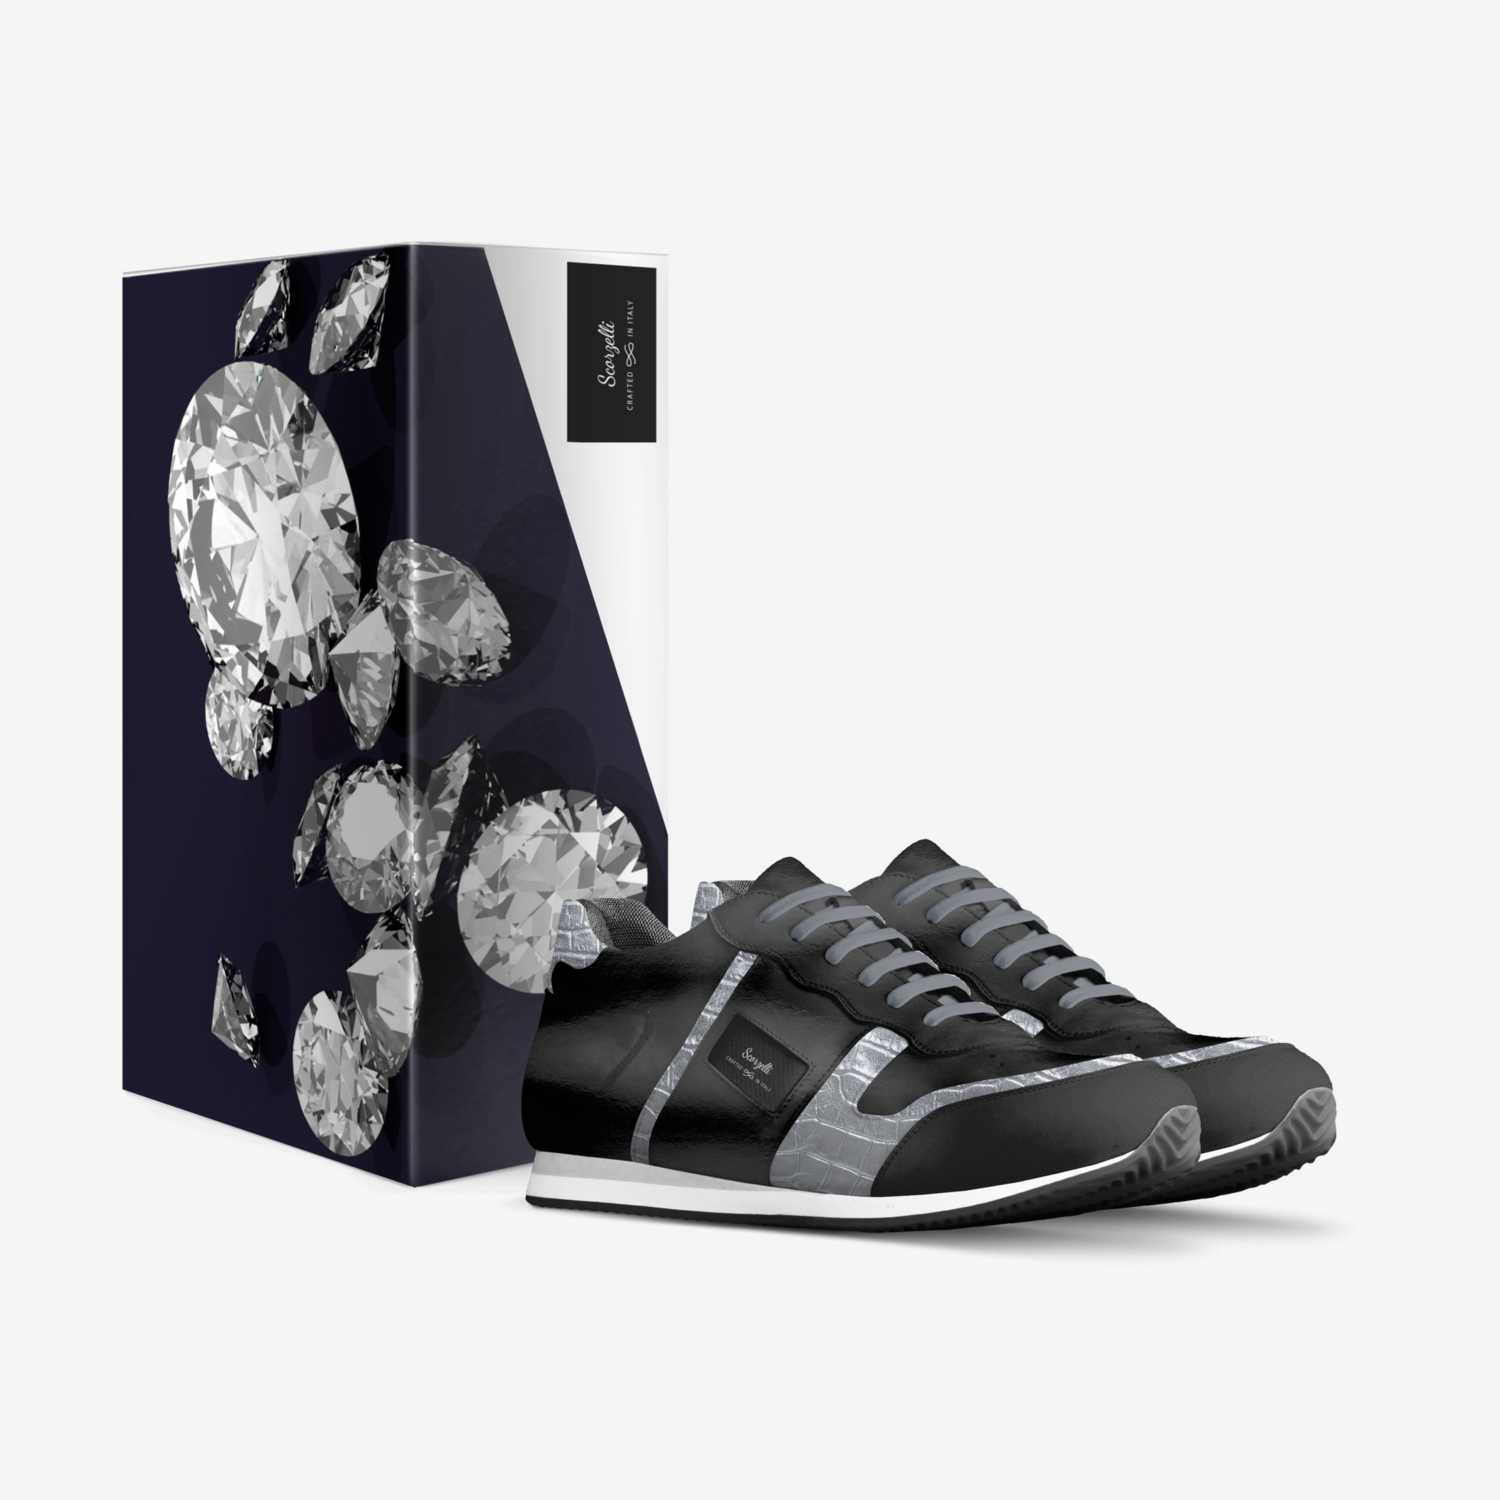 Scorzelli custom made in Italy shoes by Michalina Scorzelli | Box view